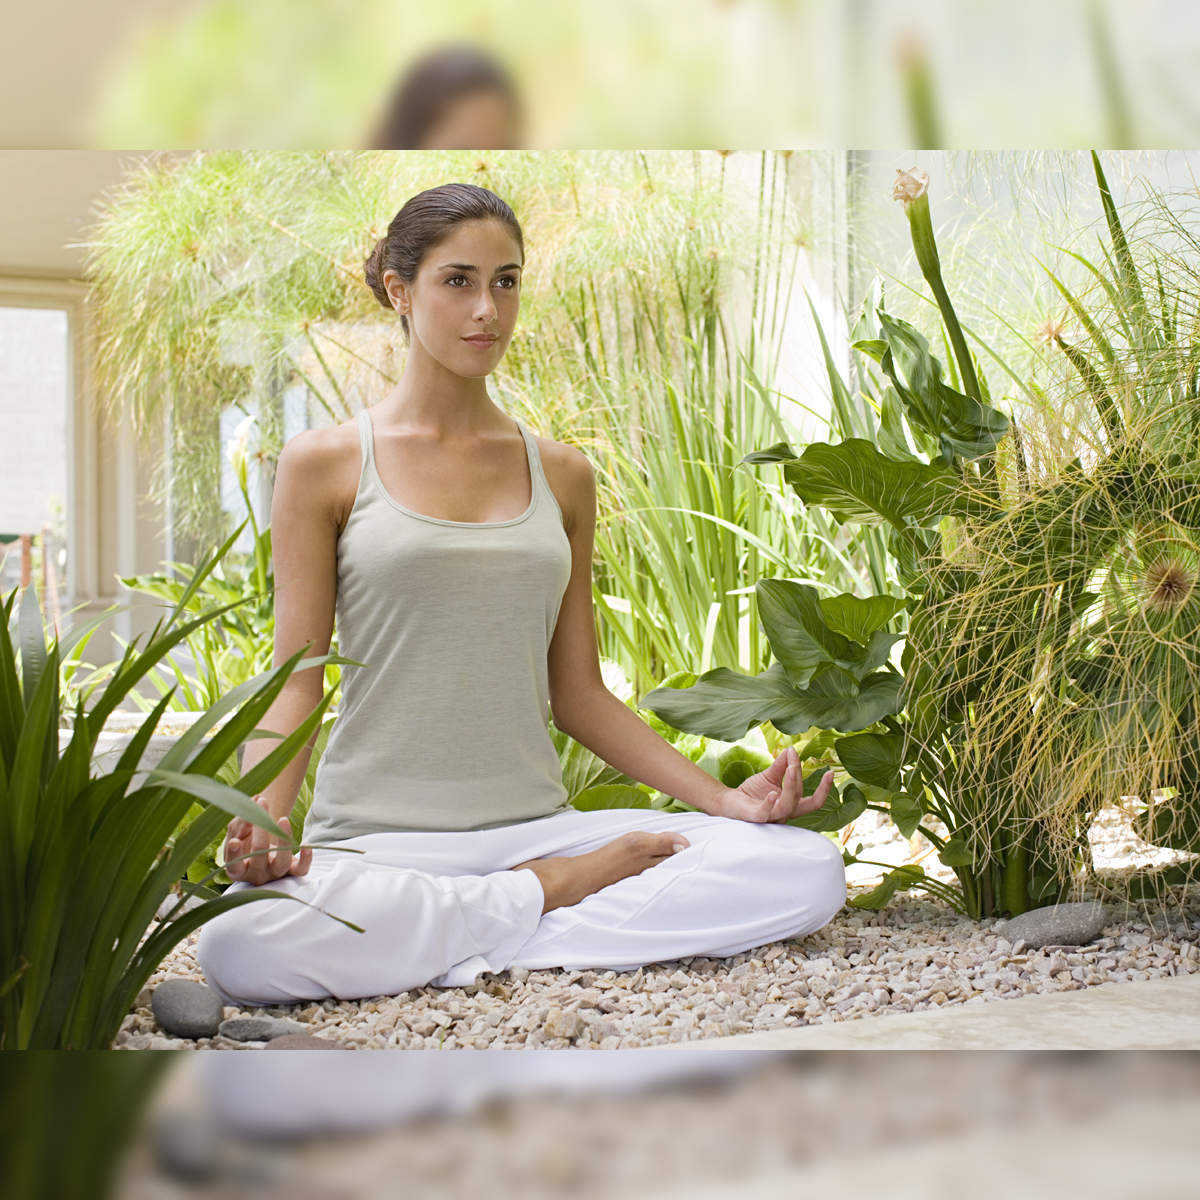 International yoga day: Jala Neti, Kapalbhati: Yogic kriyas to remove  toxins, cleanse the body and mind